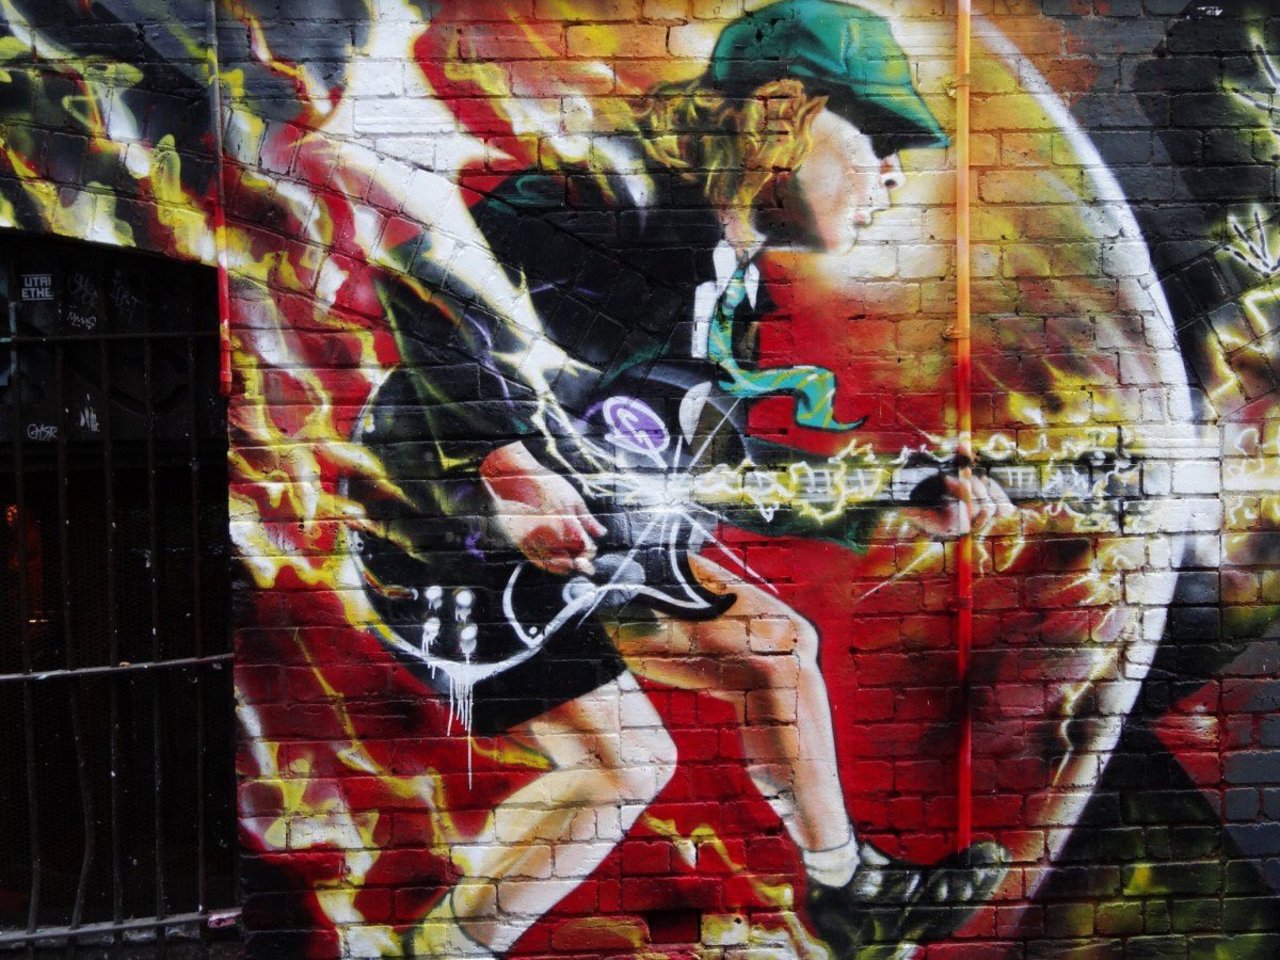 ACDC Lane #Melbourne #Australia #ACDC #Angusyoung #Streetart #urbanart #graffiti #mural #art https://t.co/d5l8OsFKnC